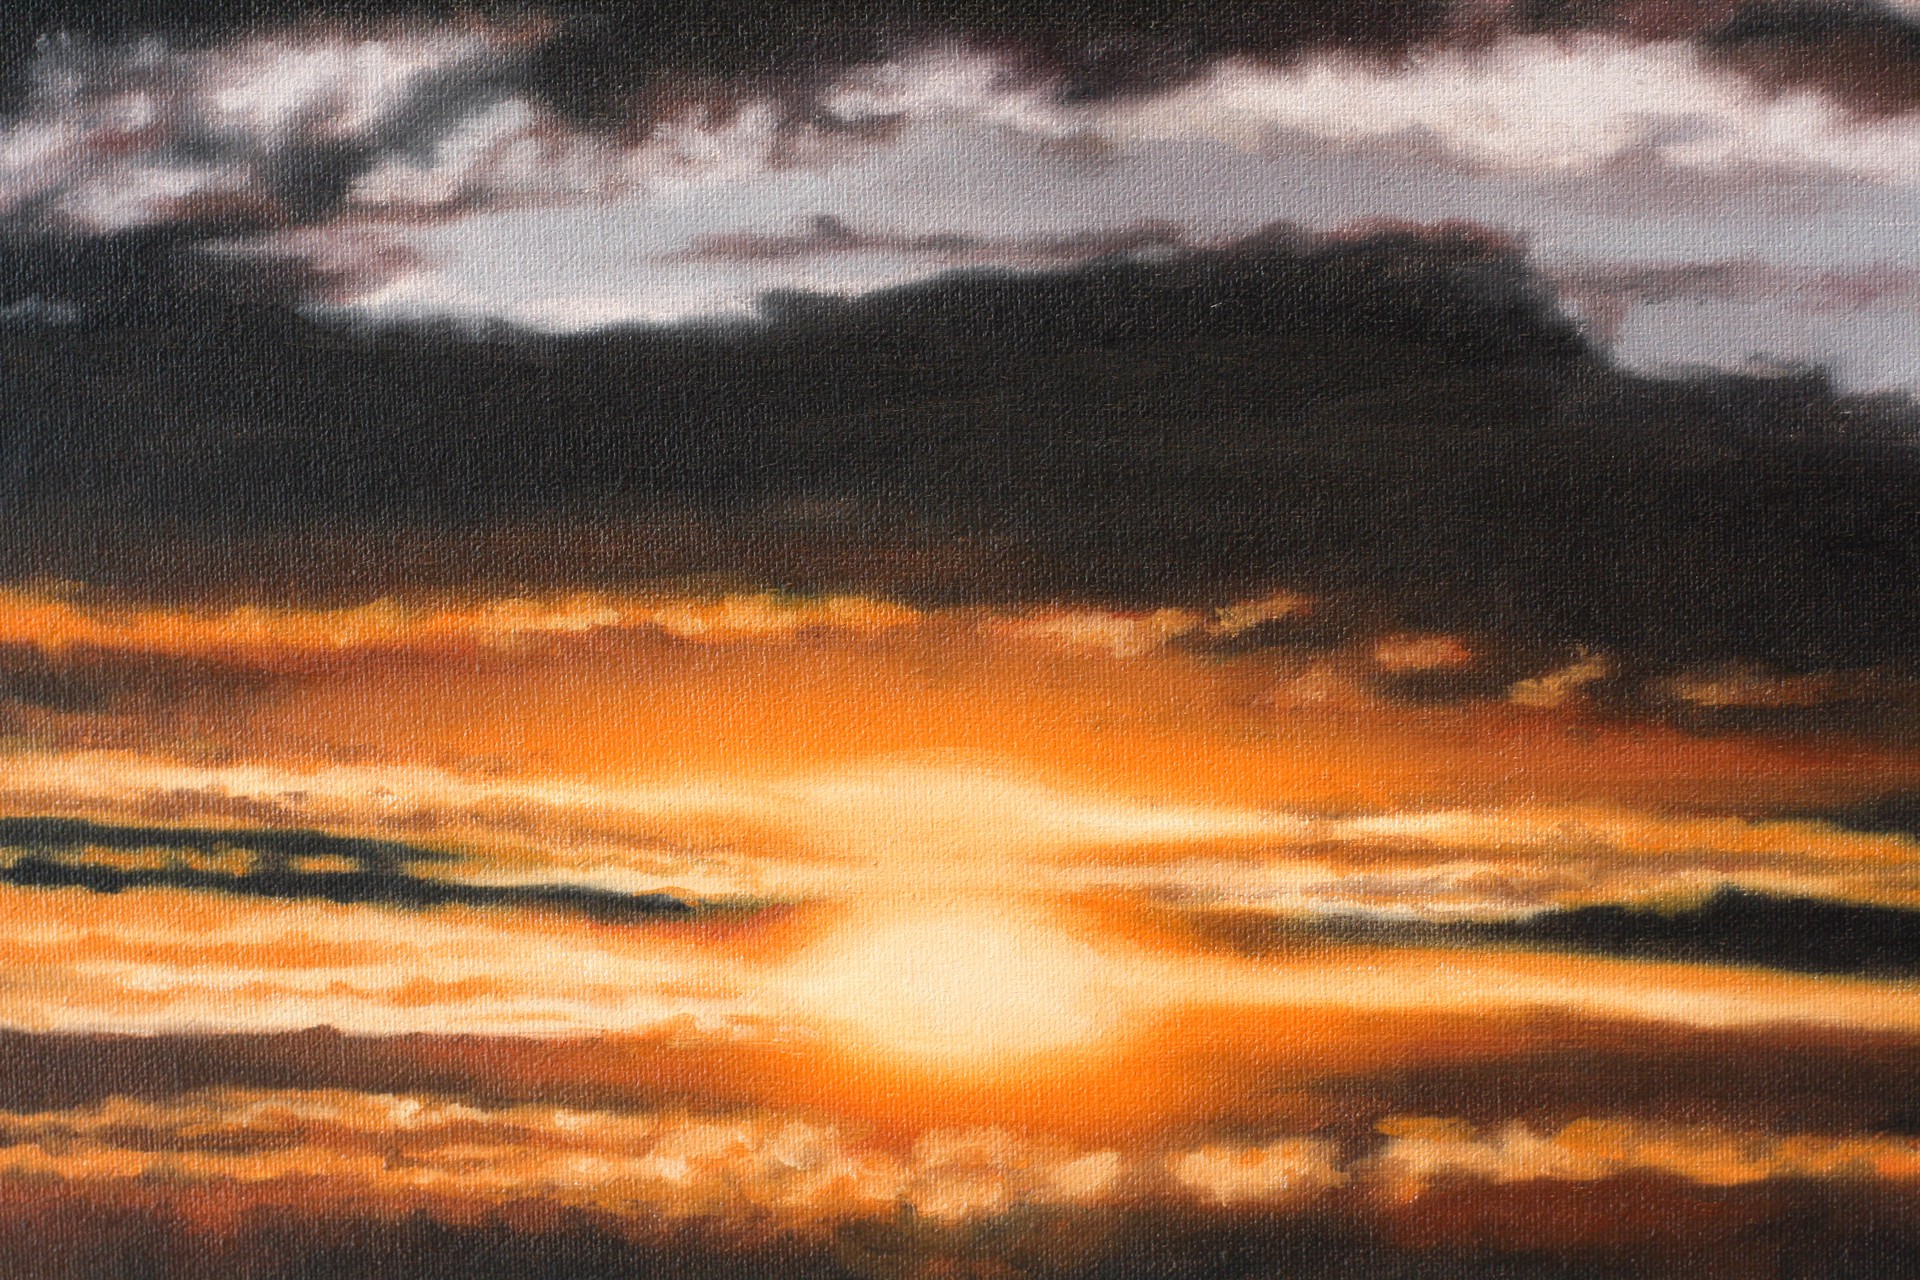 My Sunset Underground by Julian Rogers